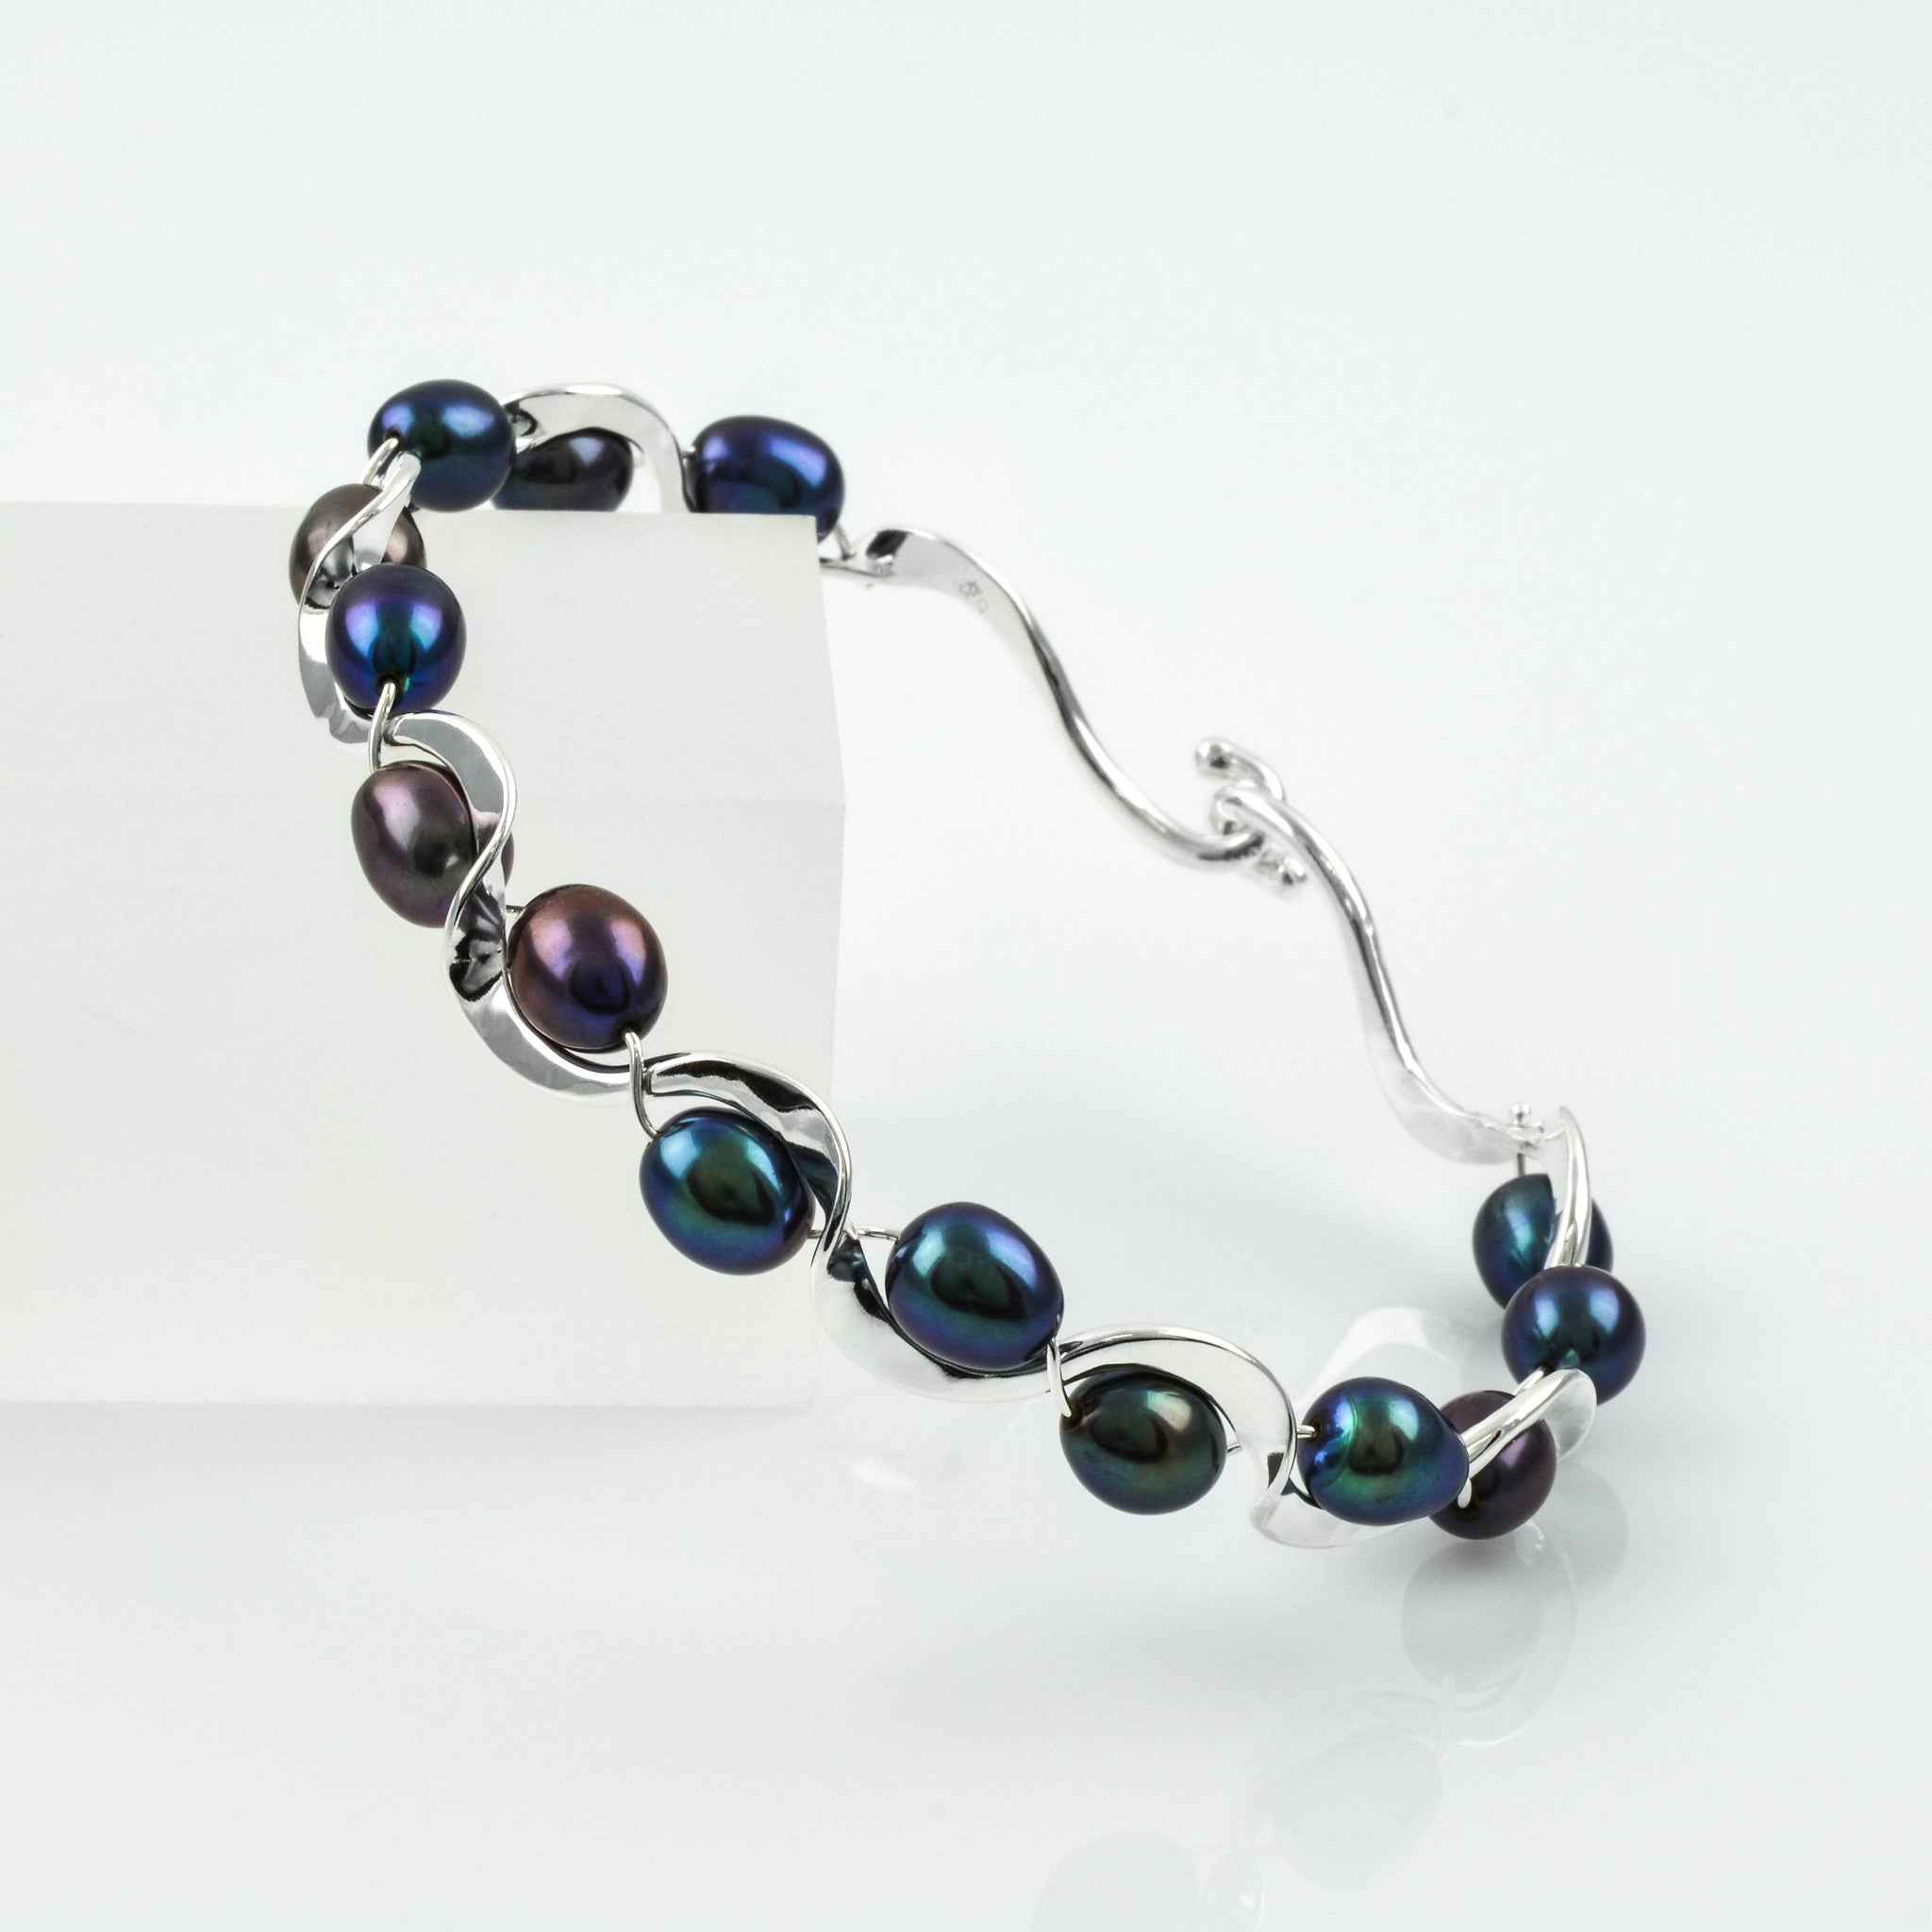 Black Pearl Ruffle Bracelet in Sterling Silver by Tom Kruskal